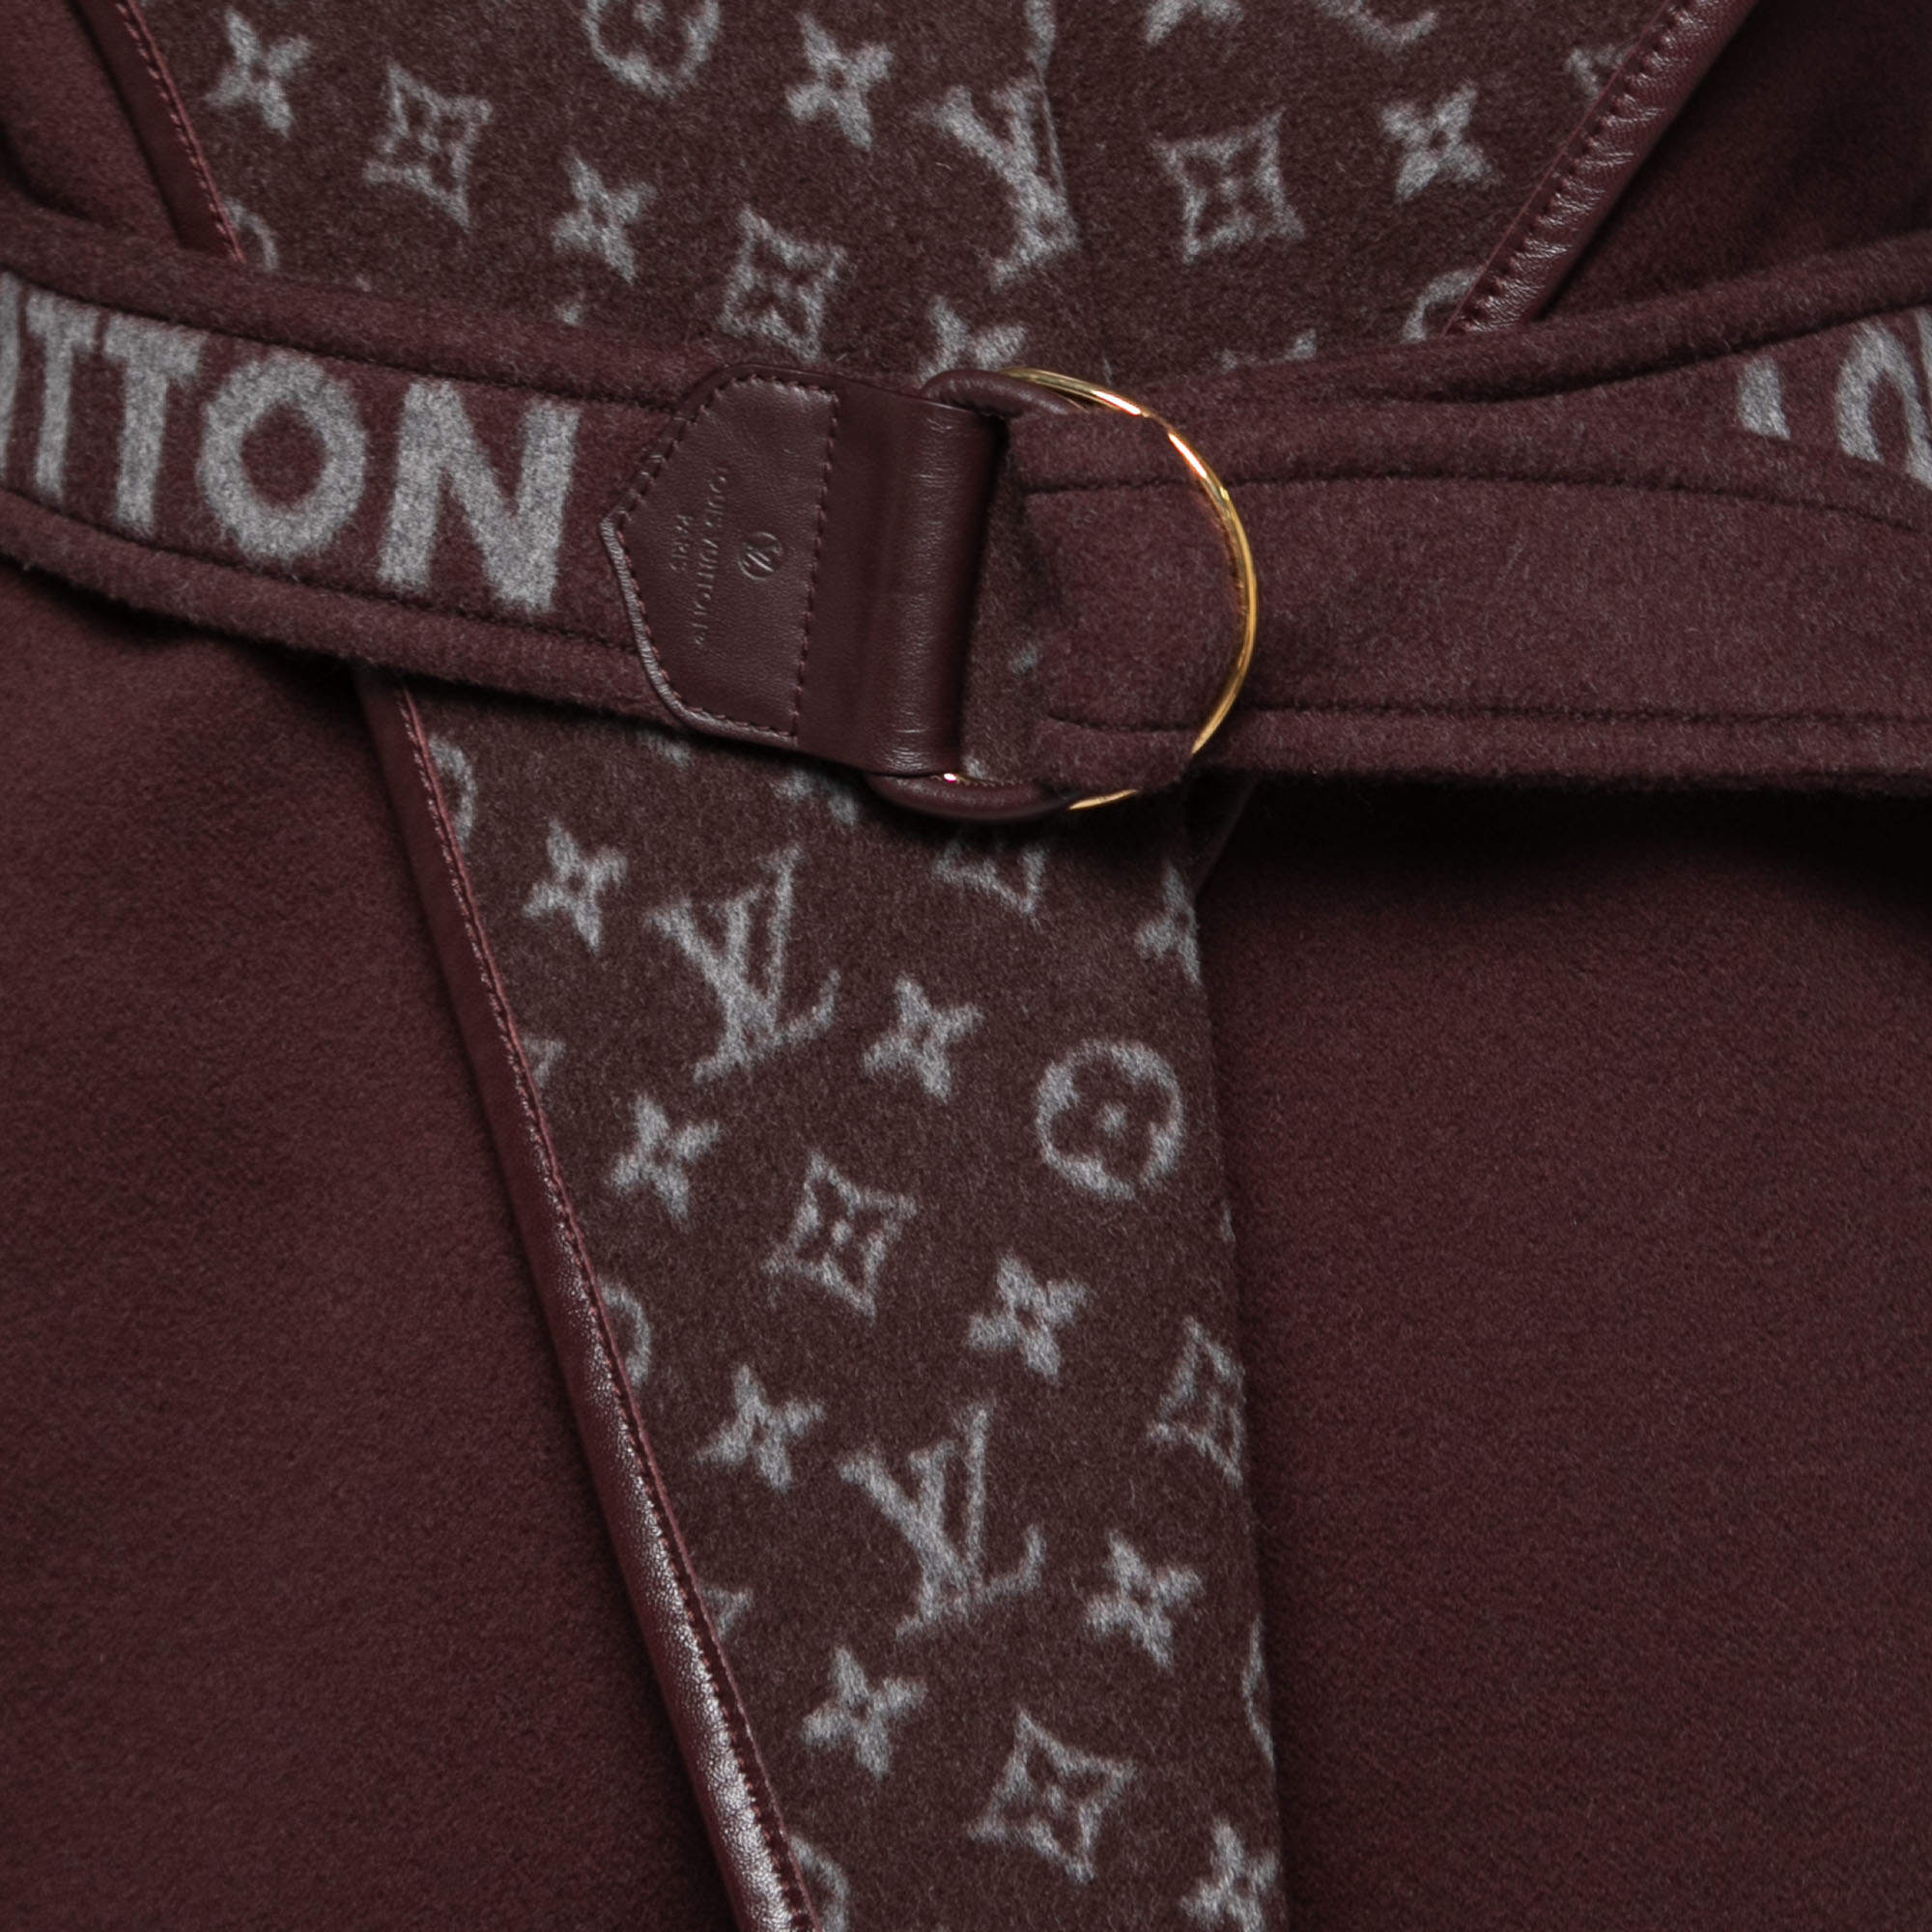 Louis Vuitton Burgundy Wool Monogram Belted Hooded Wrap Coat M Louis Vuitton